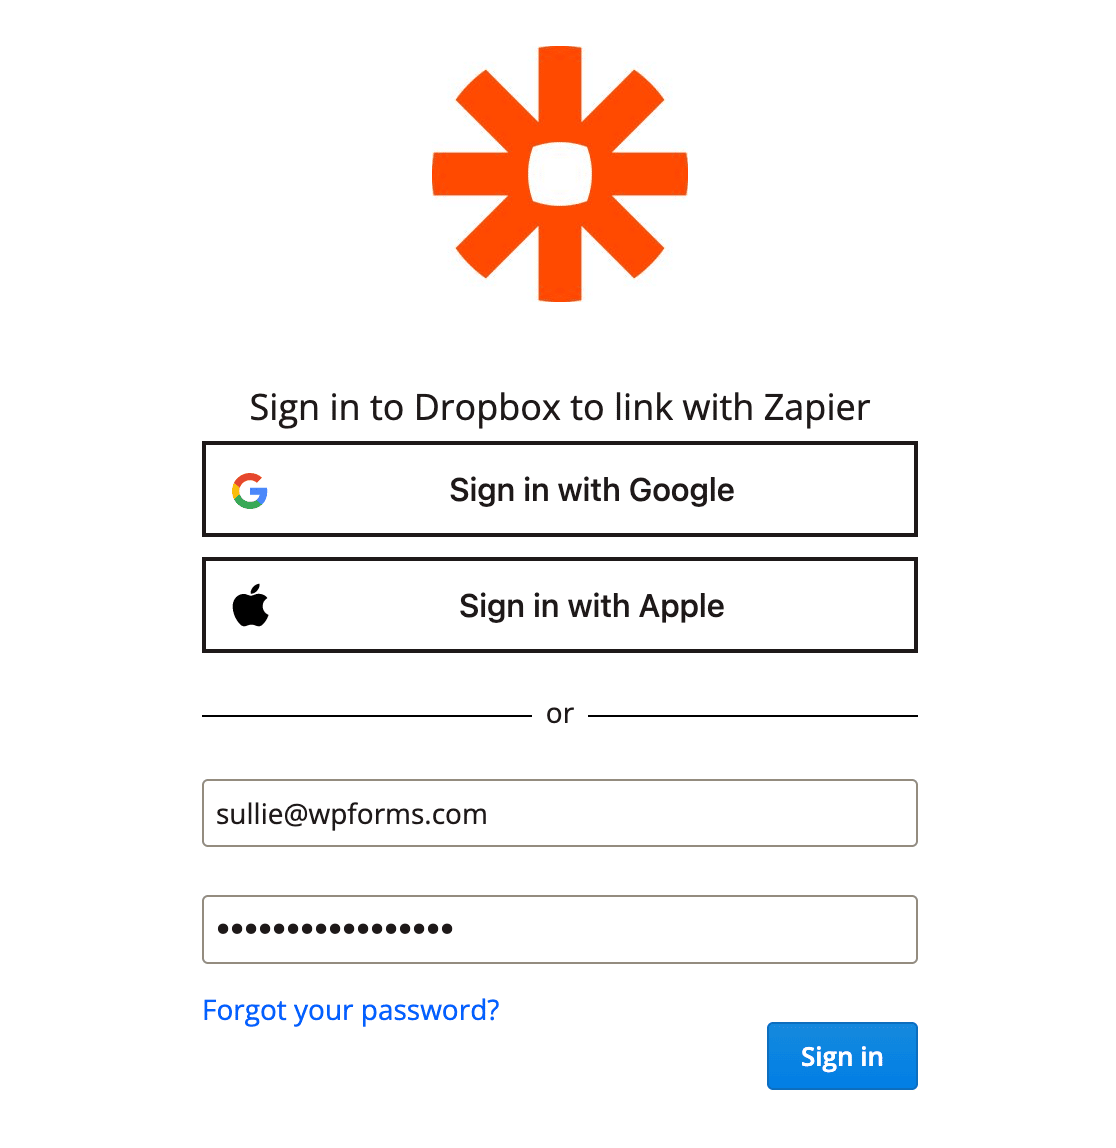 Signing in to Dropbox via Zapier